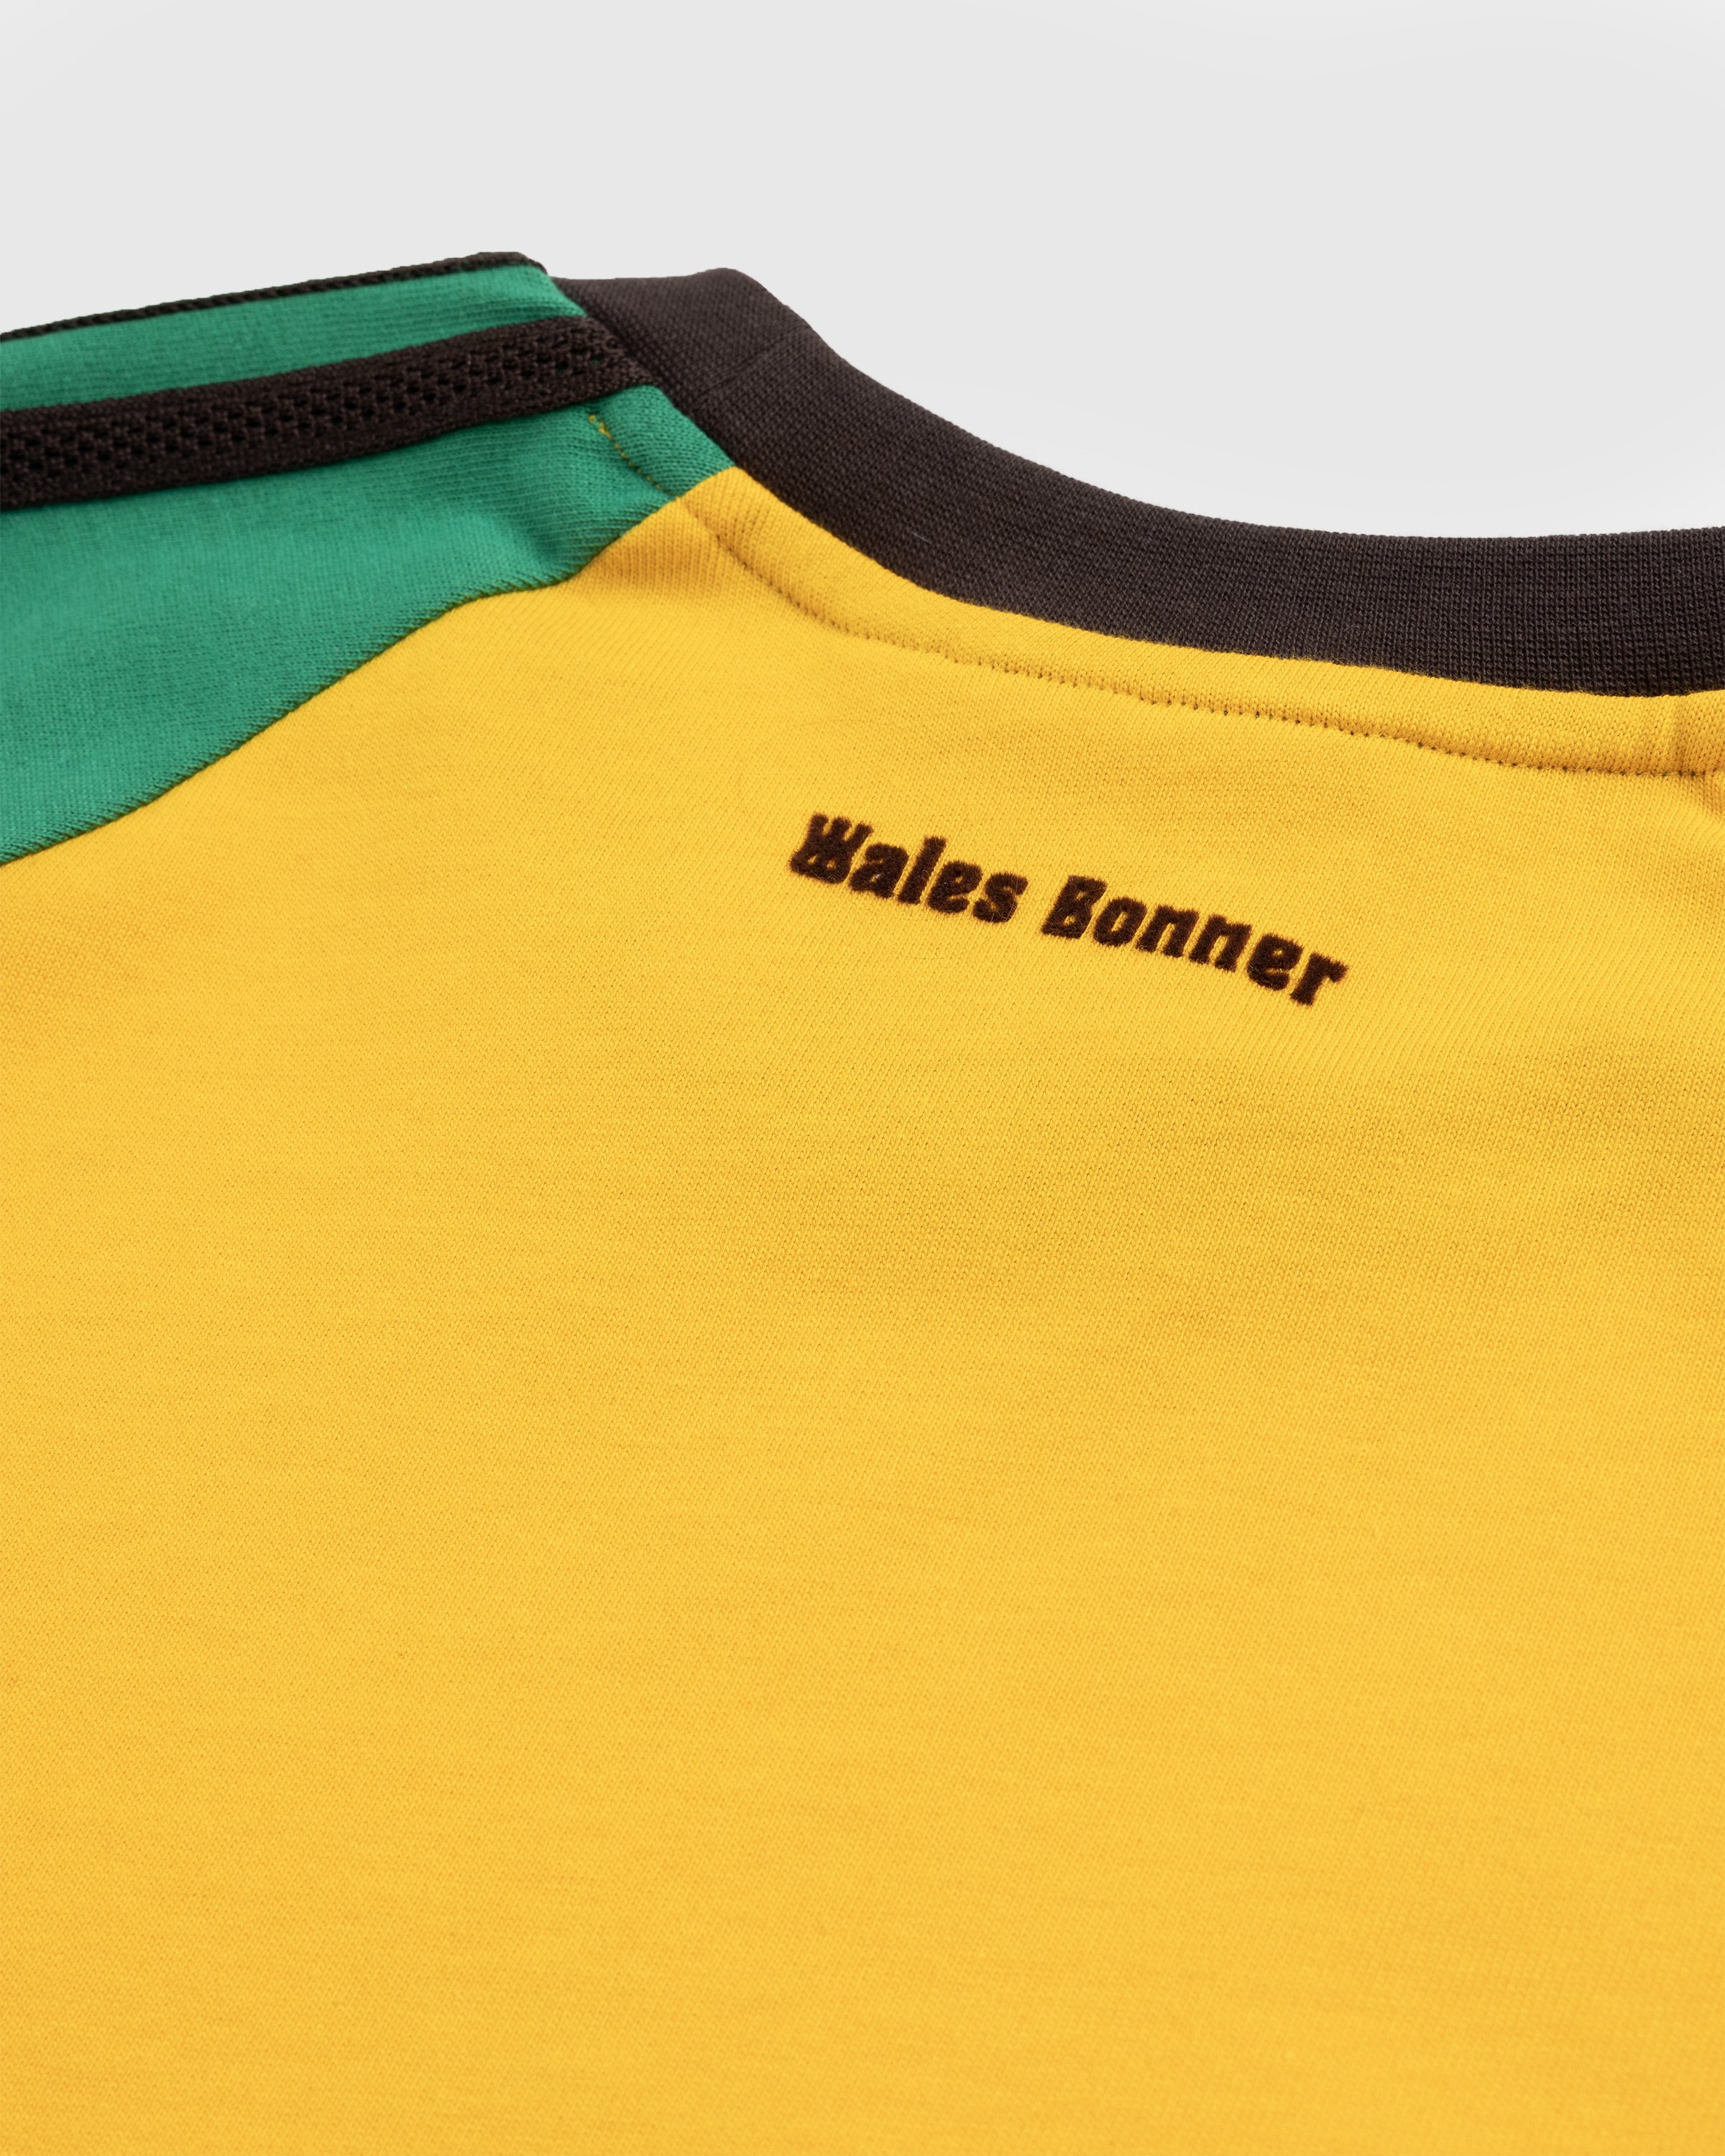 Adidas x Wales Bonner - Organic Cotton Tee Collegiate Gold - Clothing - Yellow - Image 5